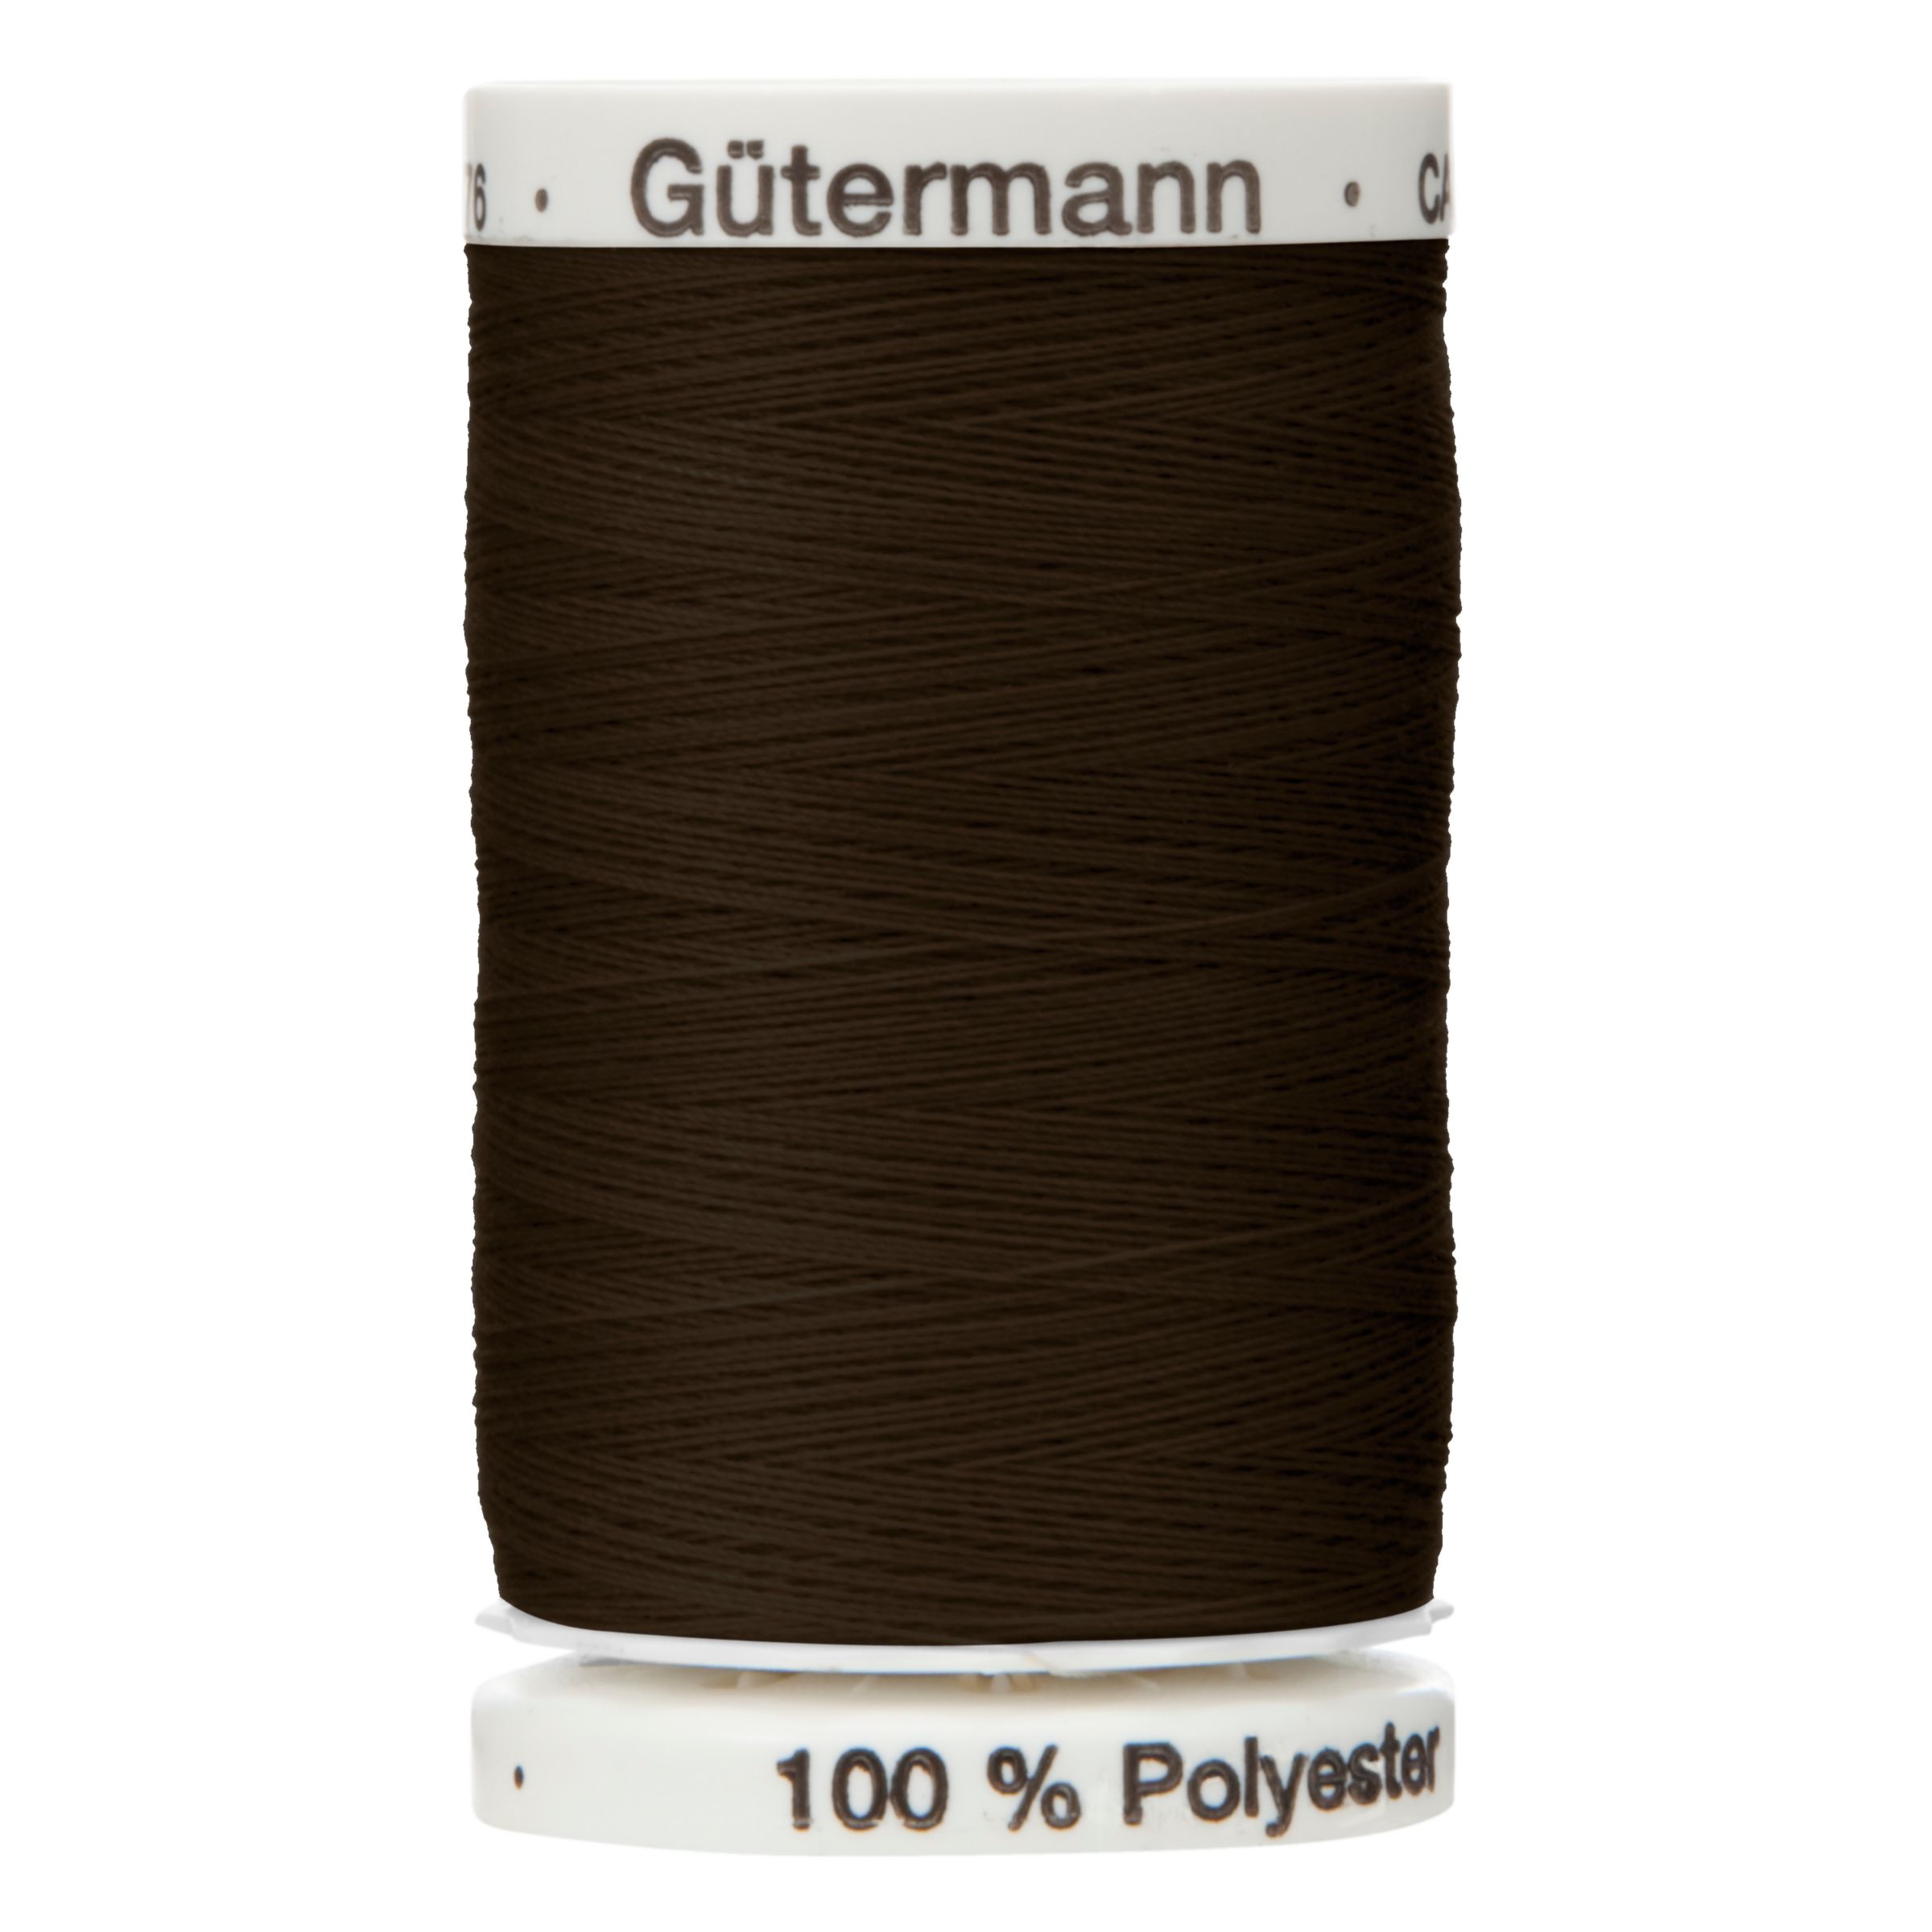 Gutermann Sew All Thread 250M 139 Colors 